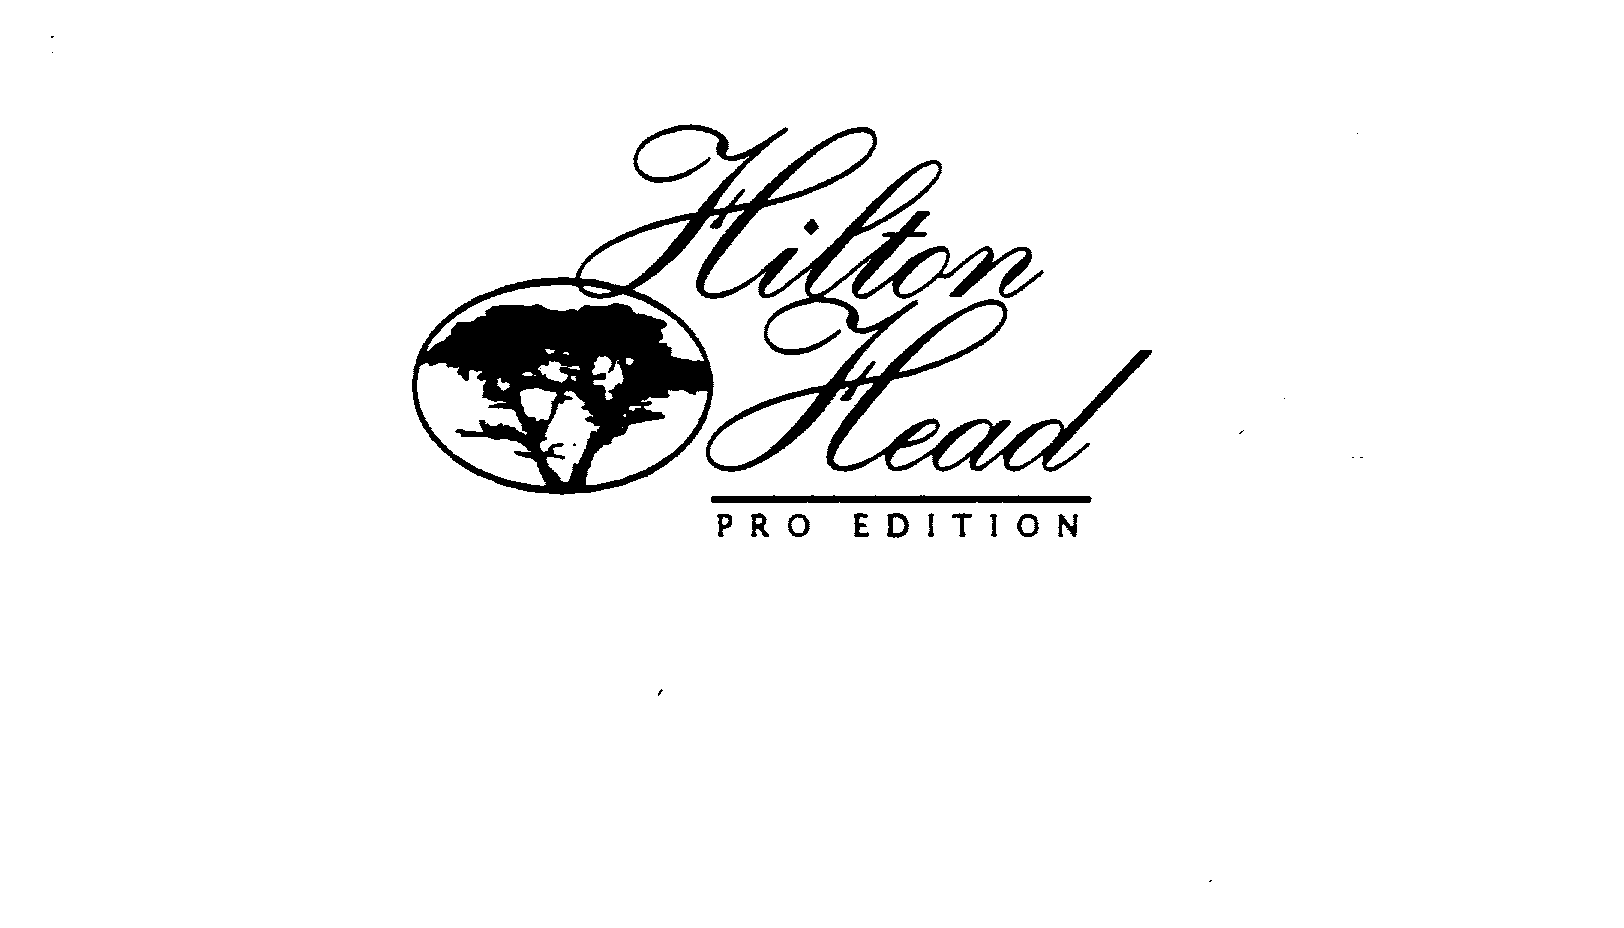  HILTON HEAD PRO EDITION